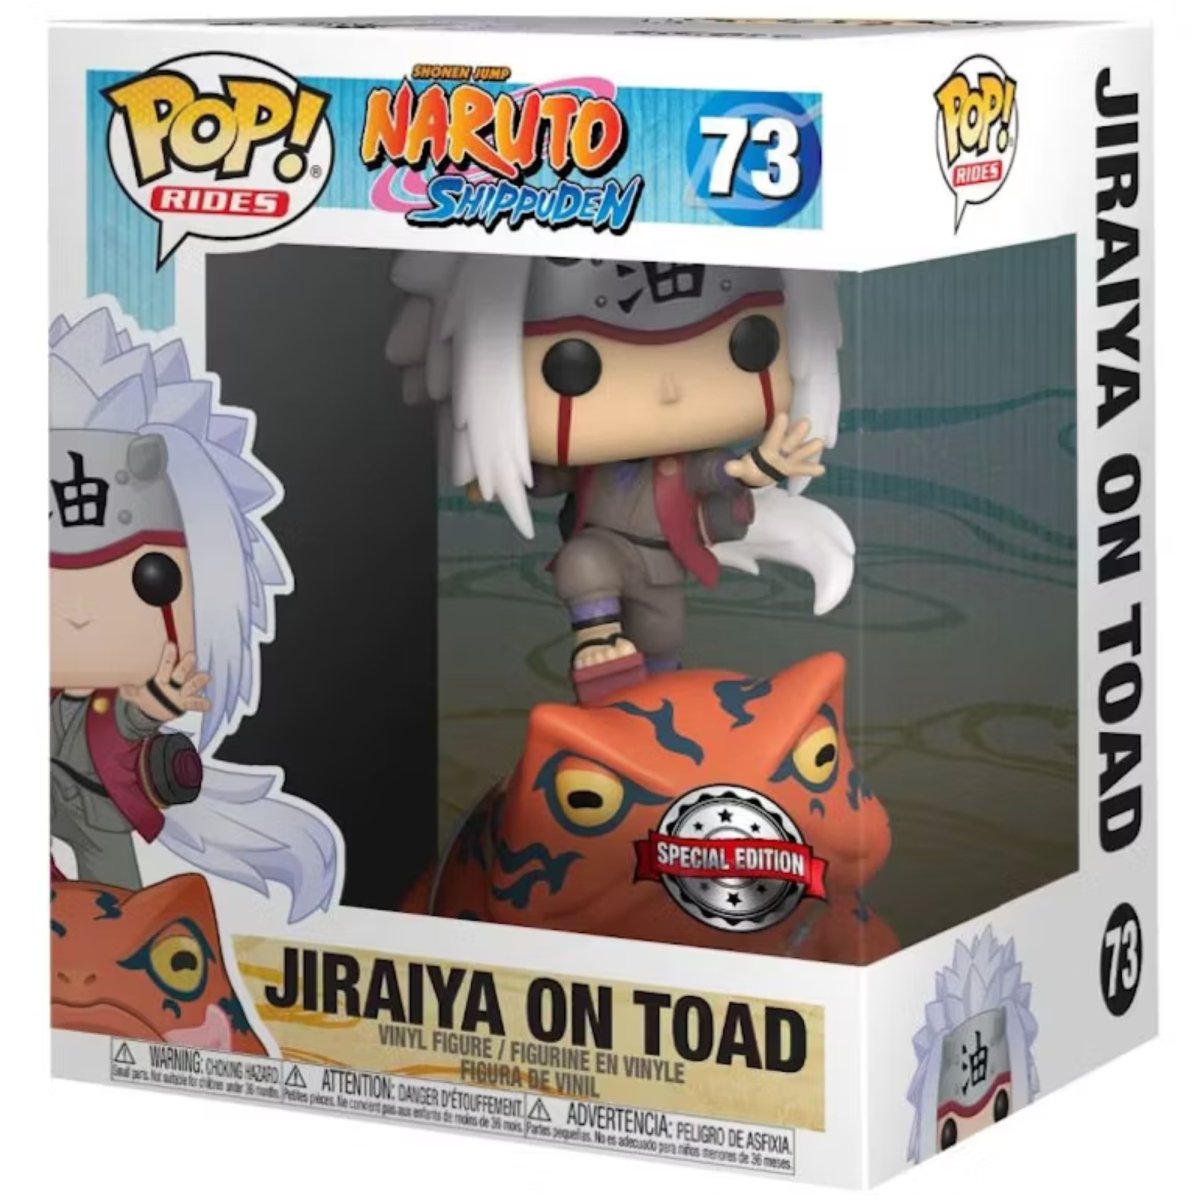 Naruto Shippuden - 6" Jiraiya on Toad (Special Edition) #73 - Funko Pop! Vinyl Anime - Persona Toys